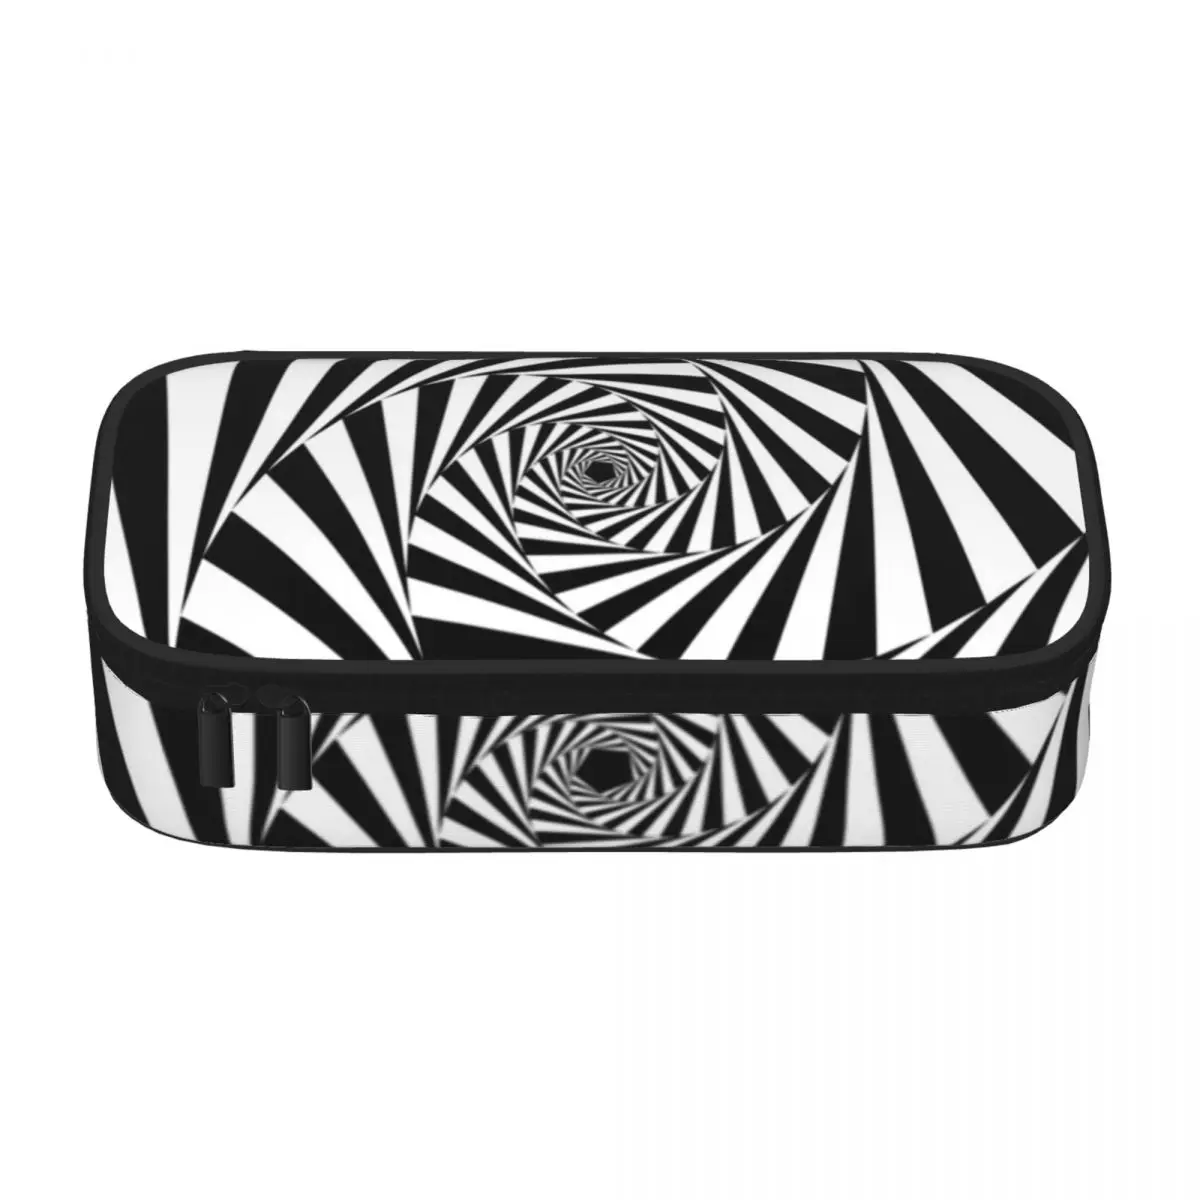 Black And White Zebra Print Pencil Case Aperture Spiral College For Child Zipper Pencil Box Cute Large Pen Bag